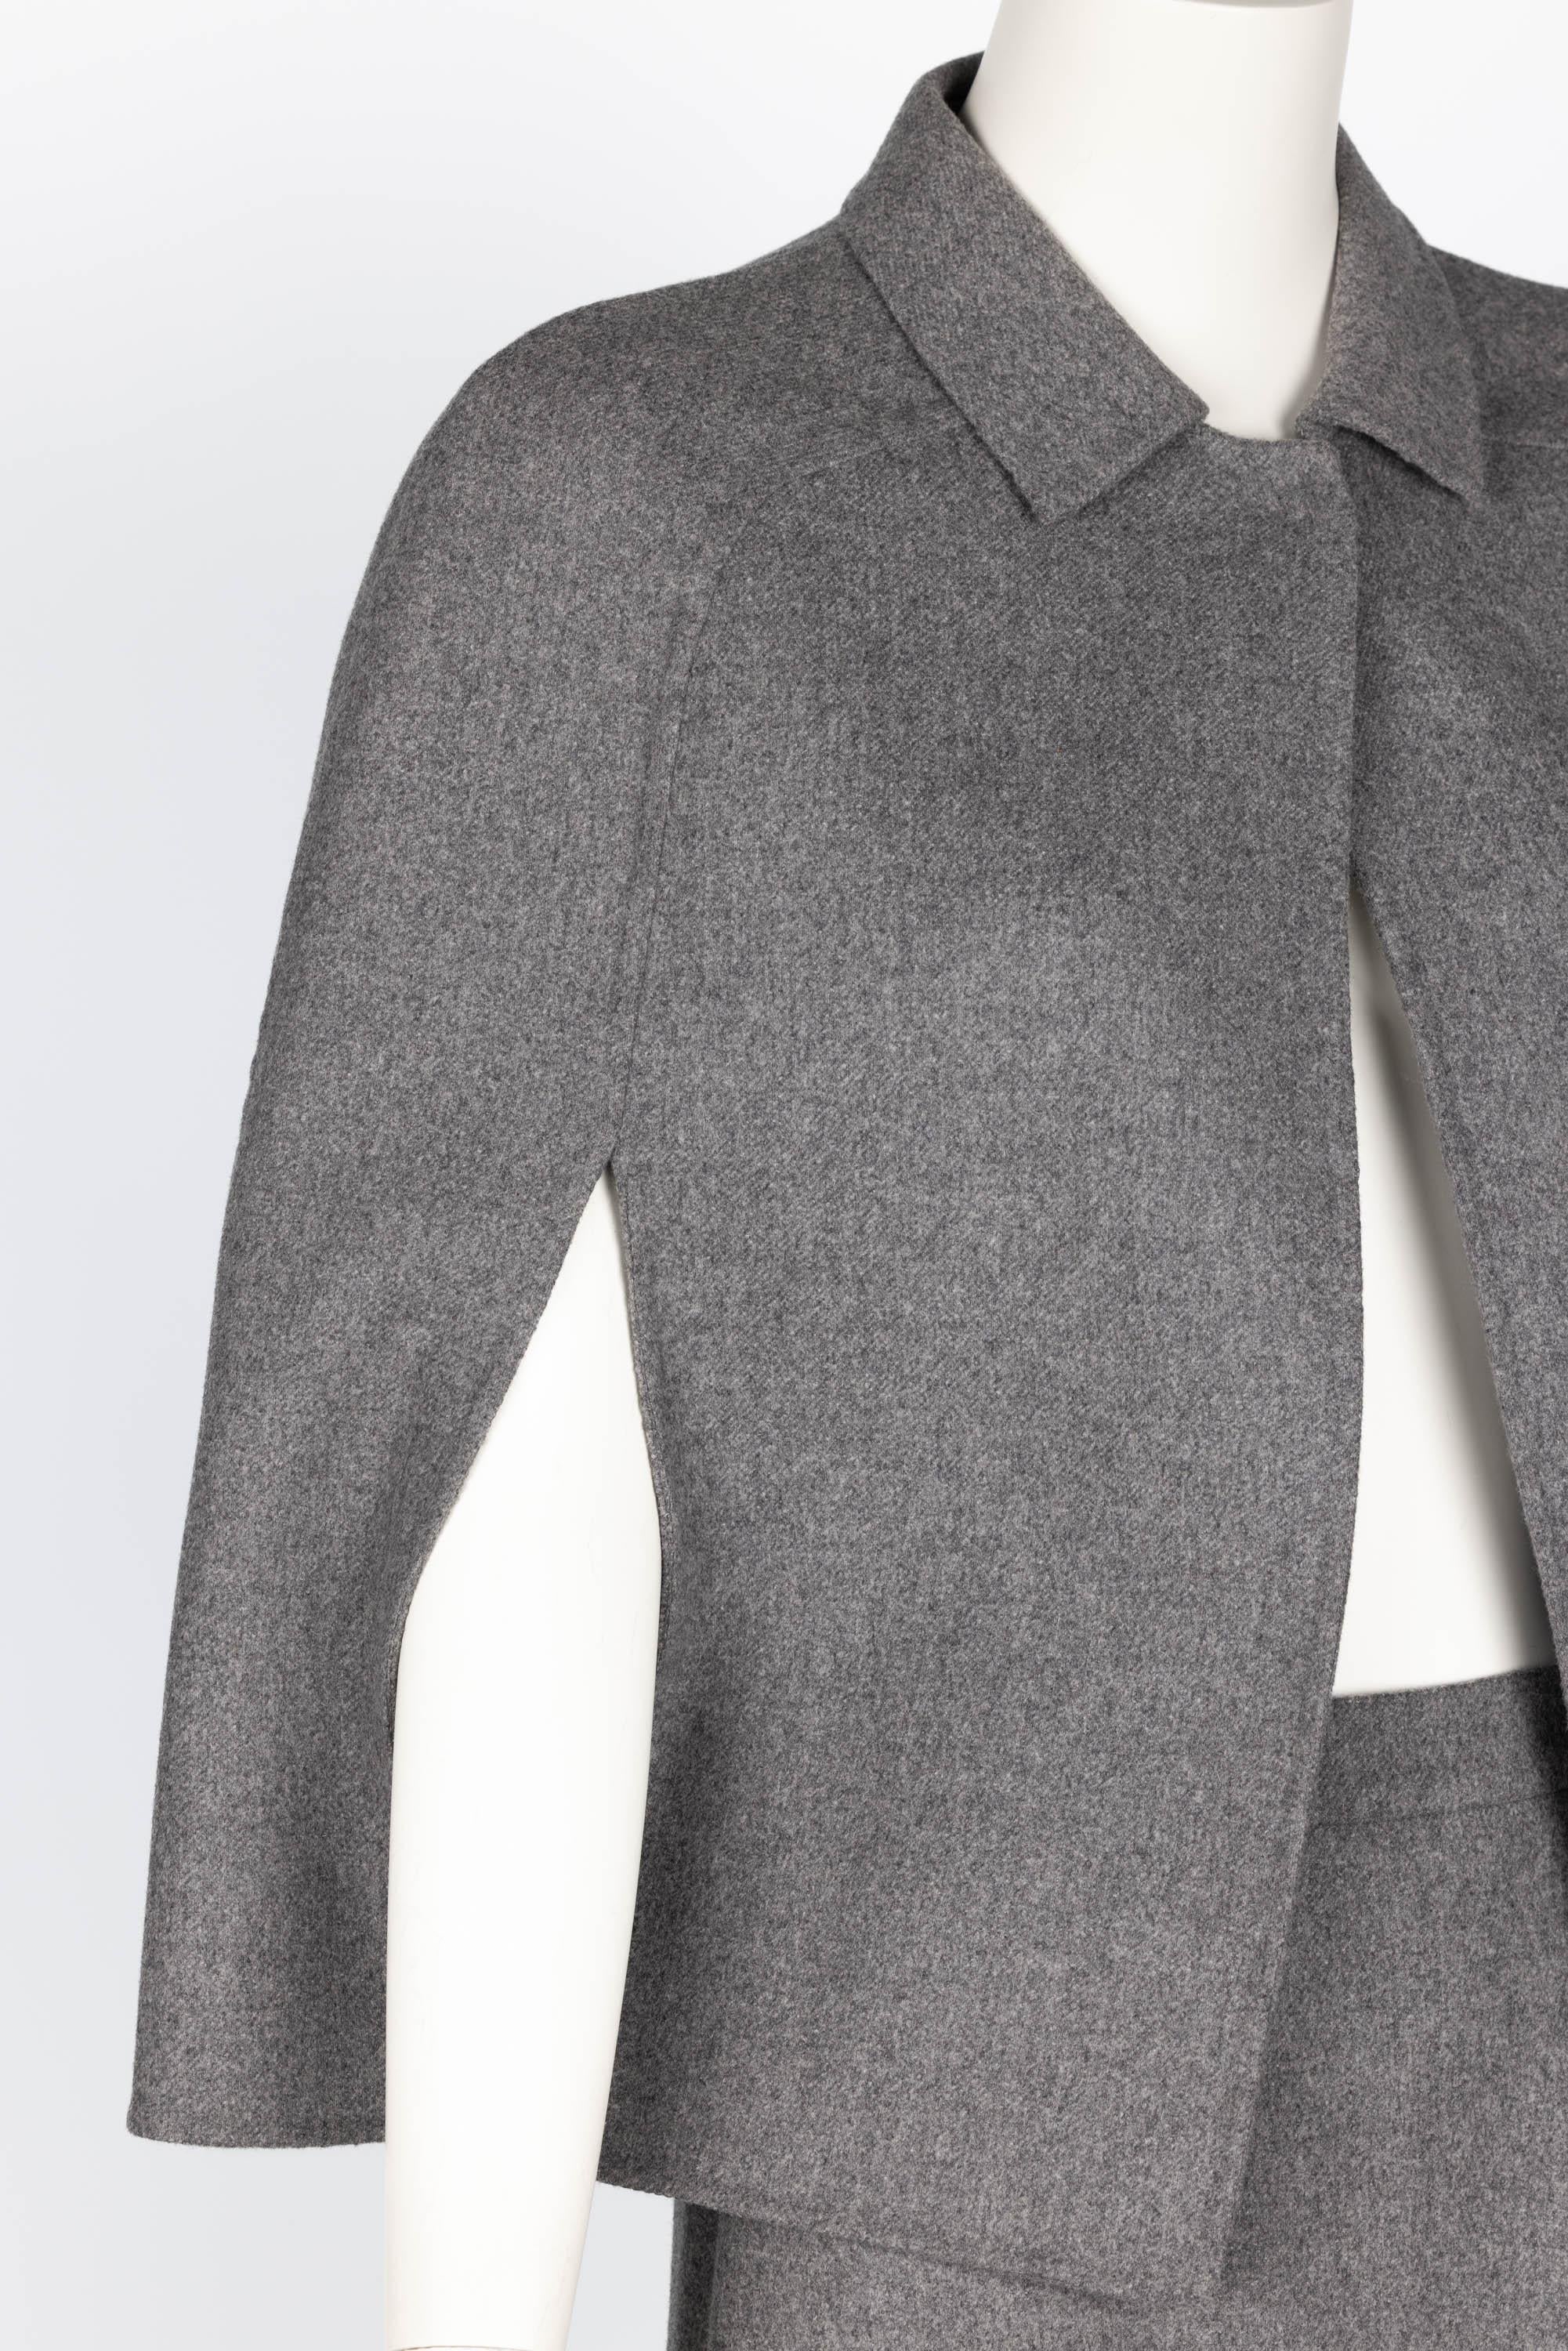 Valentino Grey Wool Angora Cape Mini Skirt Suit Set For Sale 3